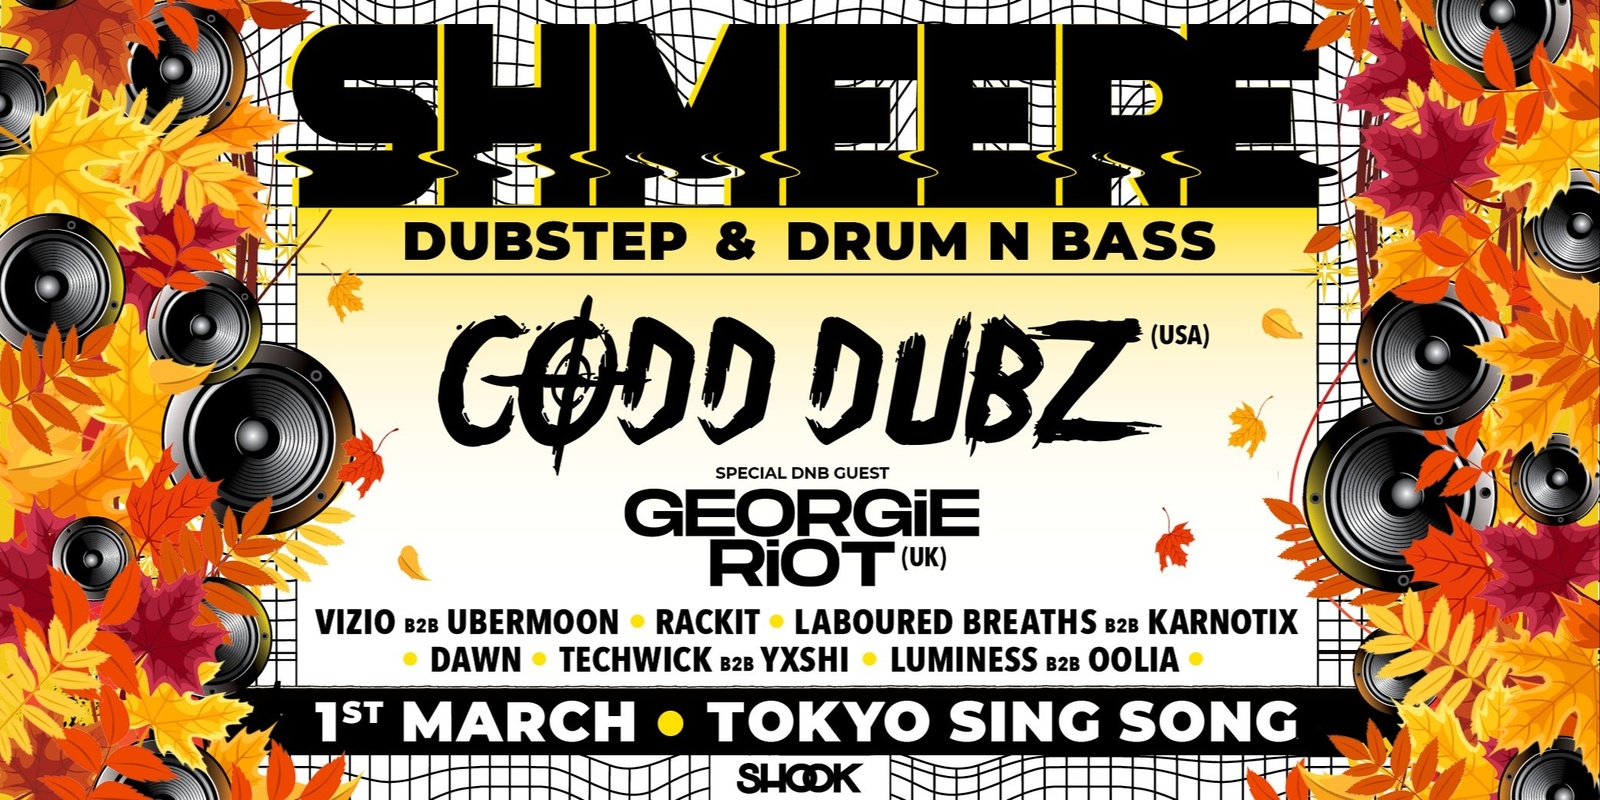 SHMEERE 11 Dubstep & Drum n Bass ft. CODD DUBZ (USA) + GEORGIE 